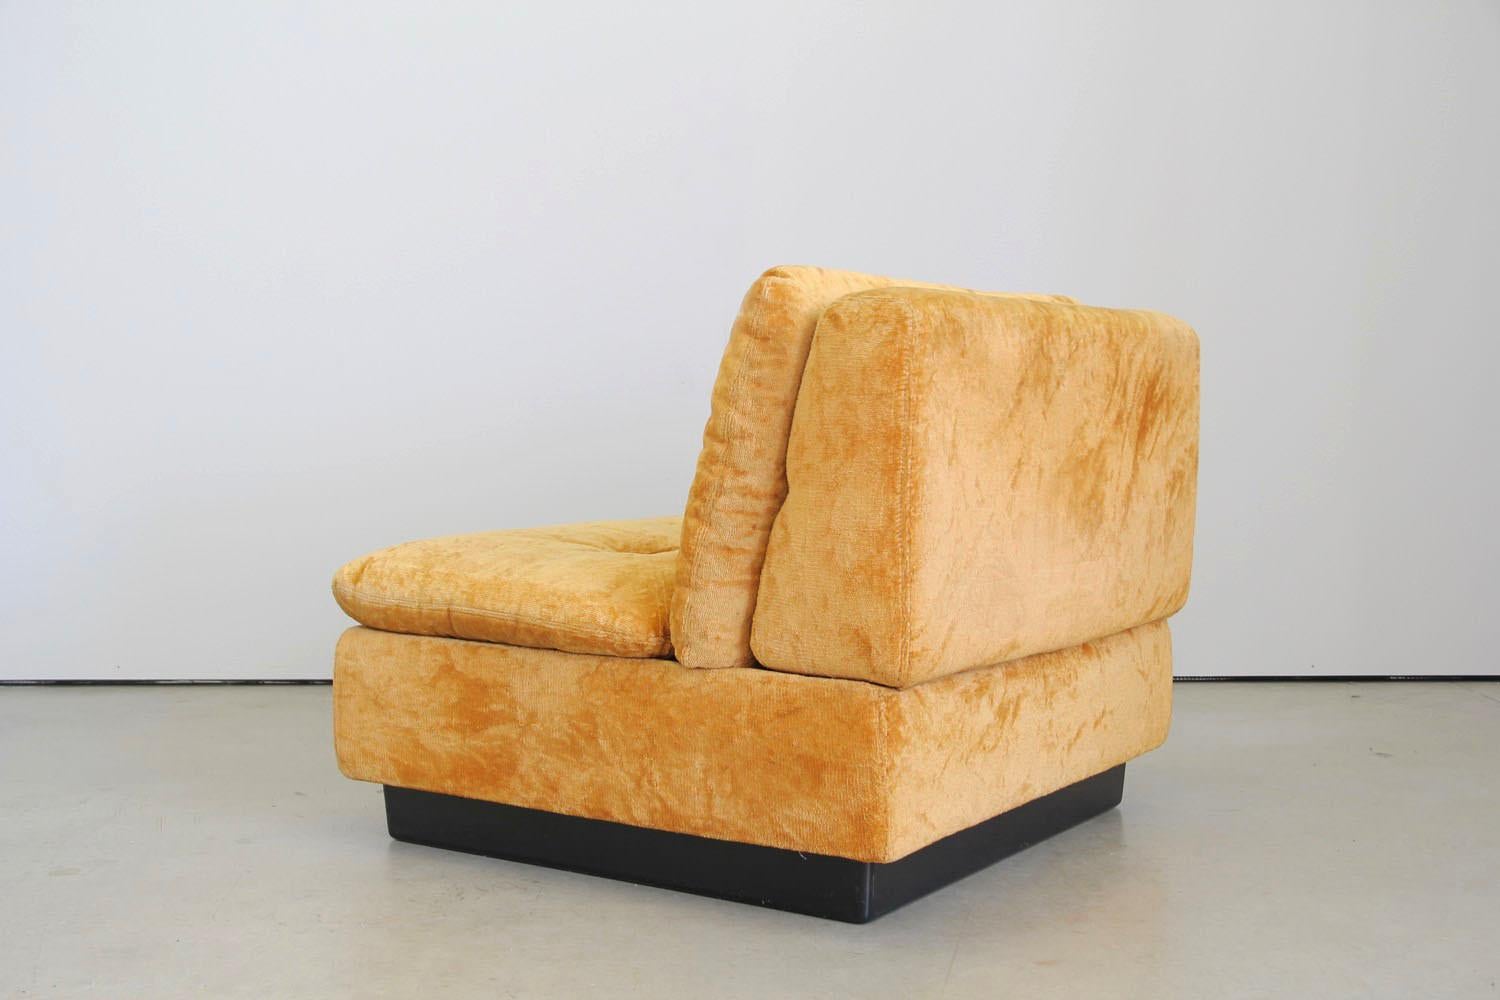 Modulares Saporiti Italia-Sofa-Sitzsystem, 1970er Jahre 1